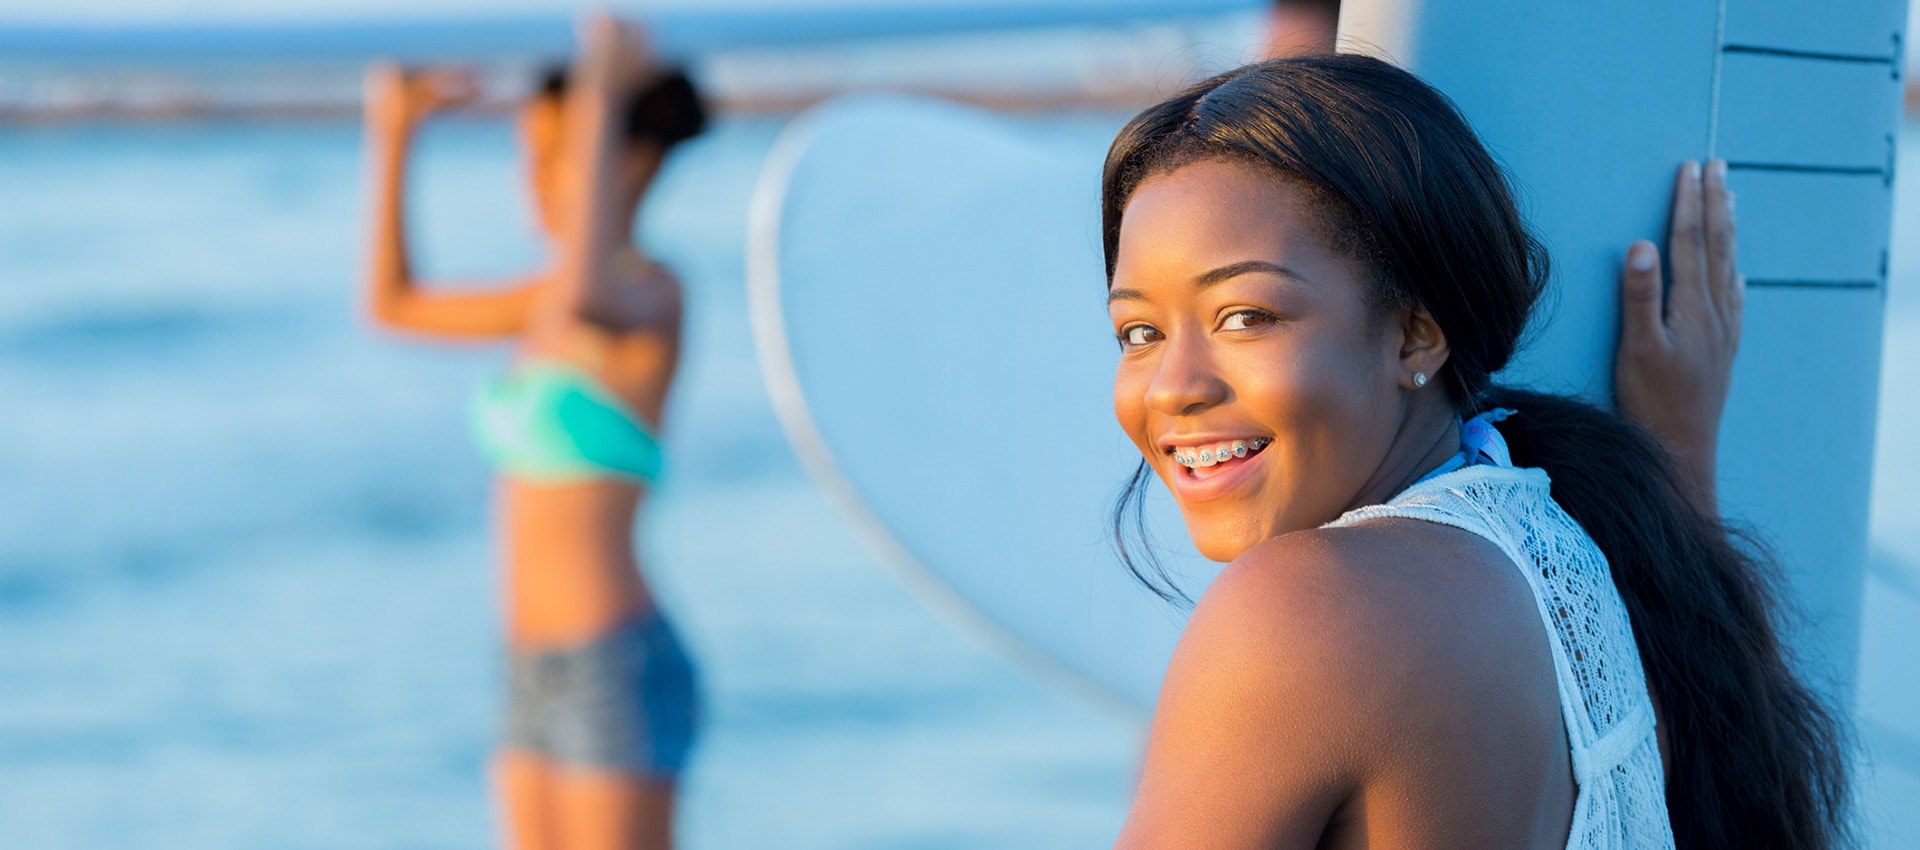 Girl smiling at beach